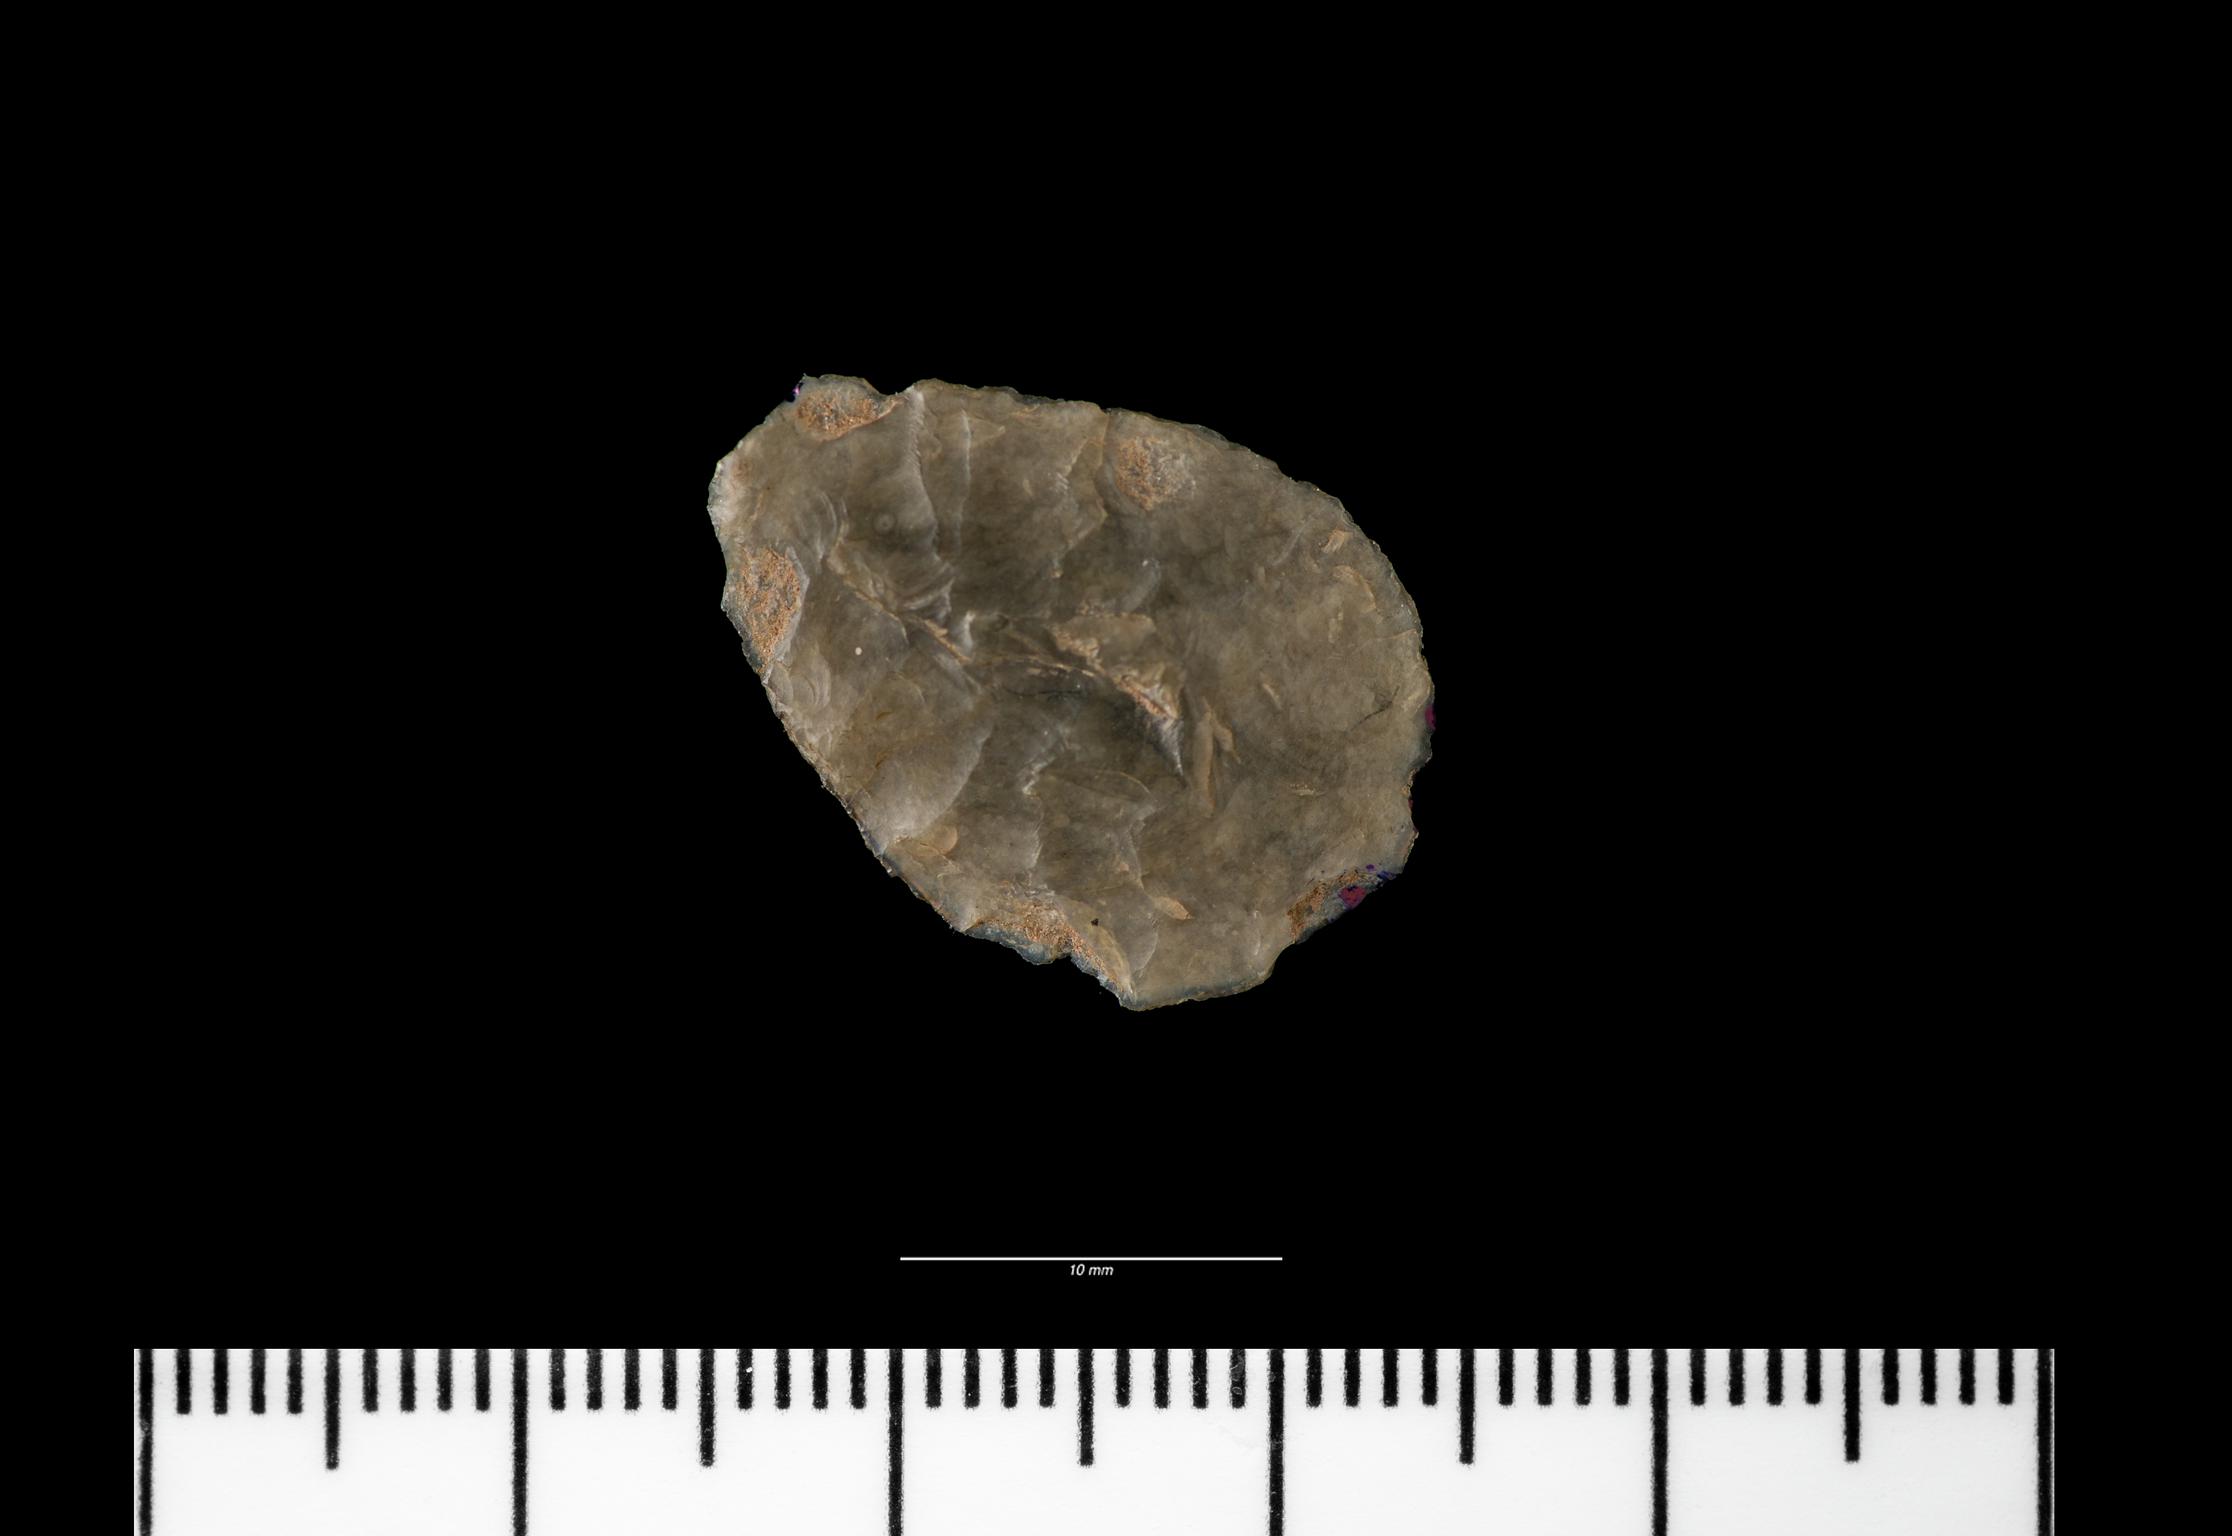 Neolithic flint leaf shaped arrowhead